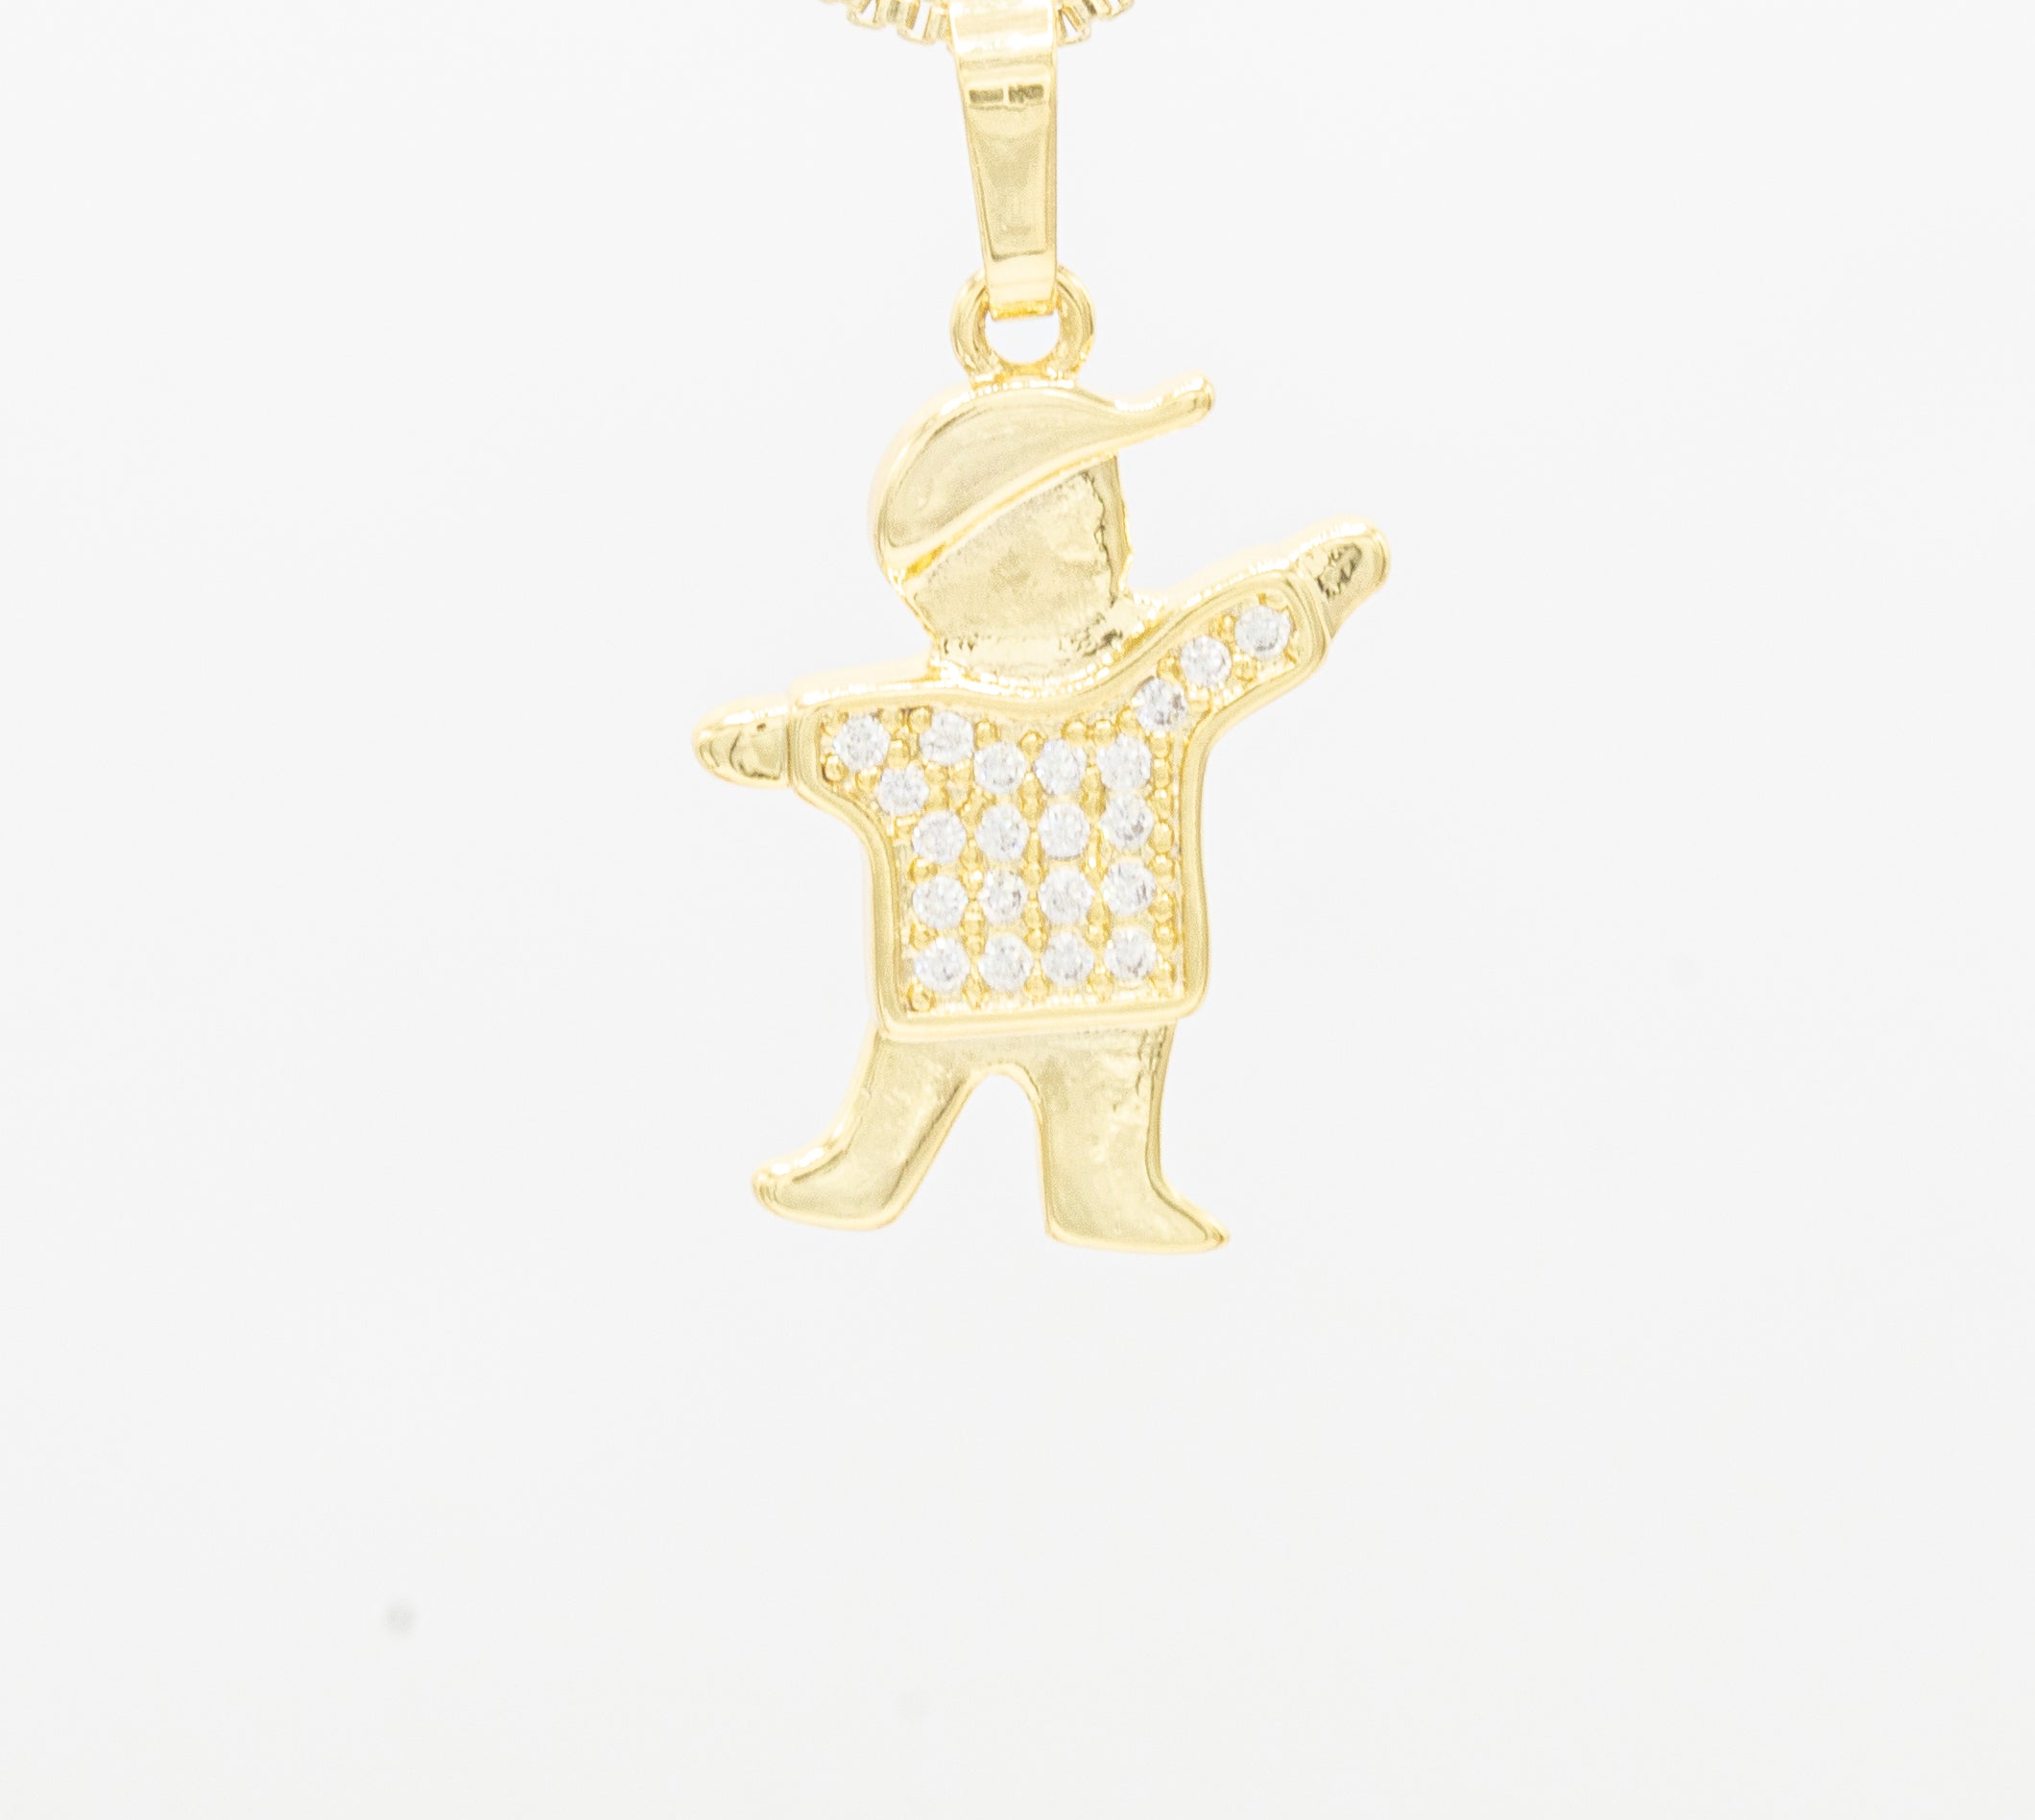 Boy Cubic Zirconia Pendant 14K Gold Filled Women Fashion Jewelry